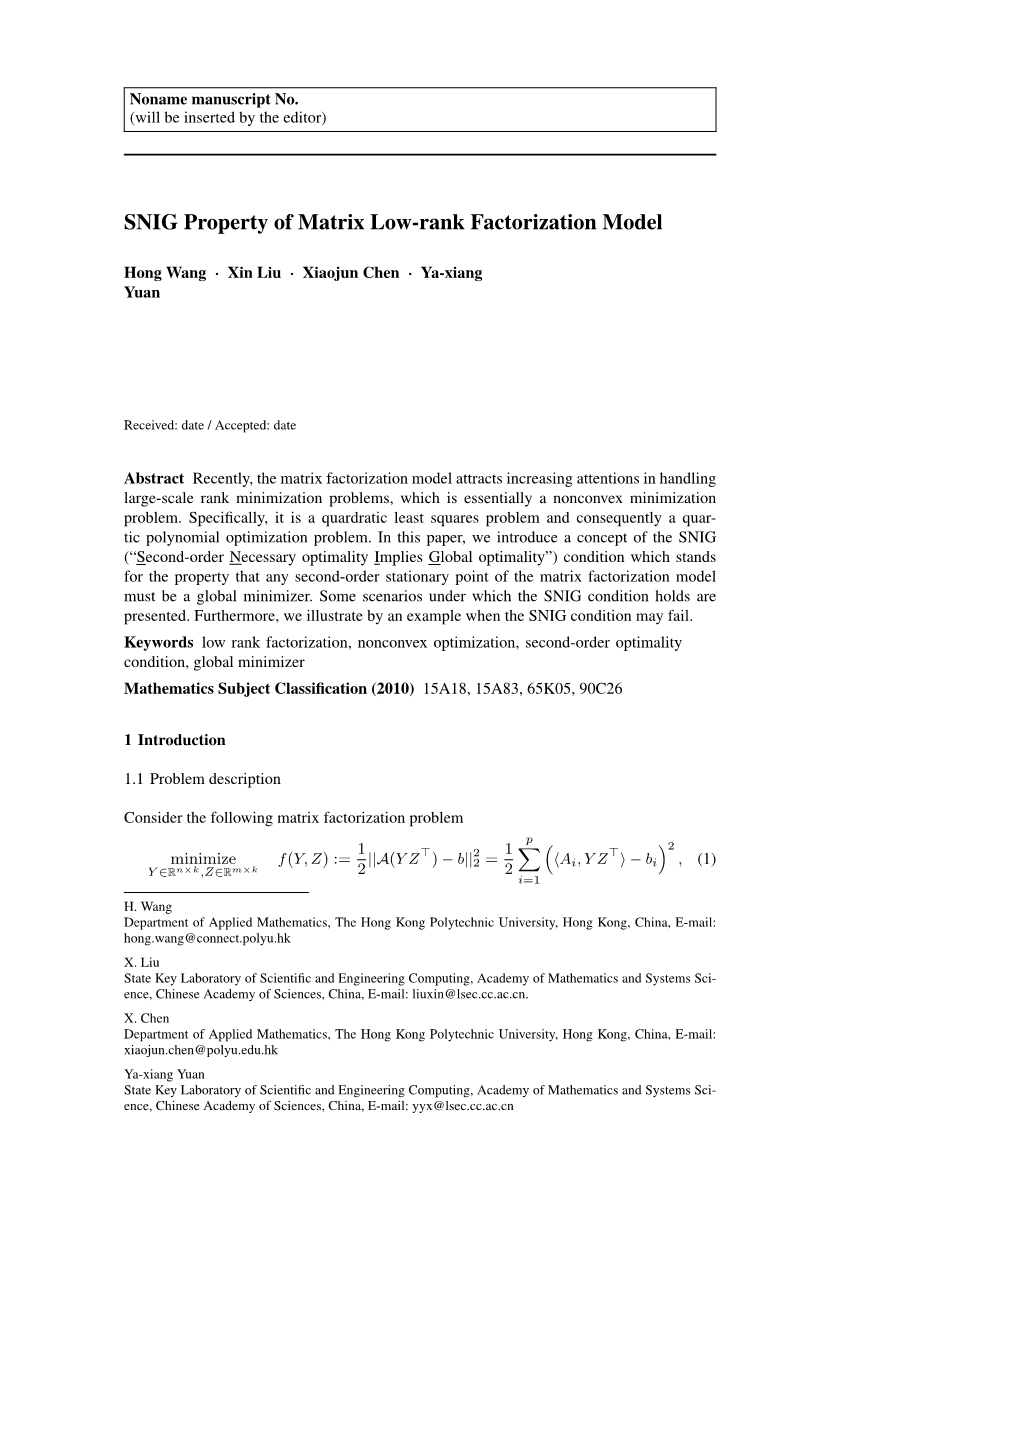 SNIG Property of Matrix Low-Rank Factorization Model